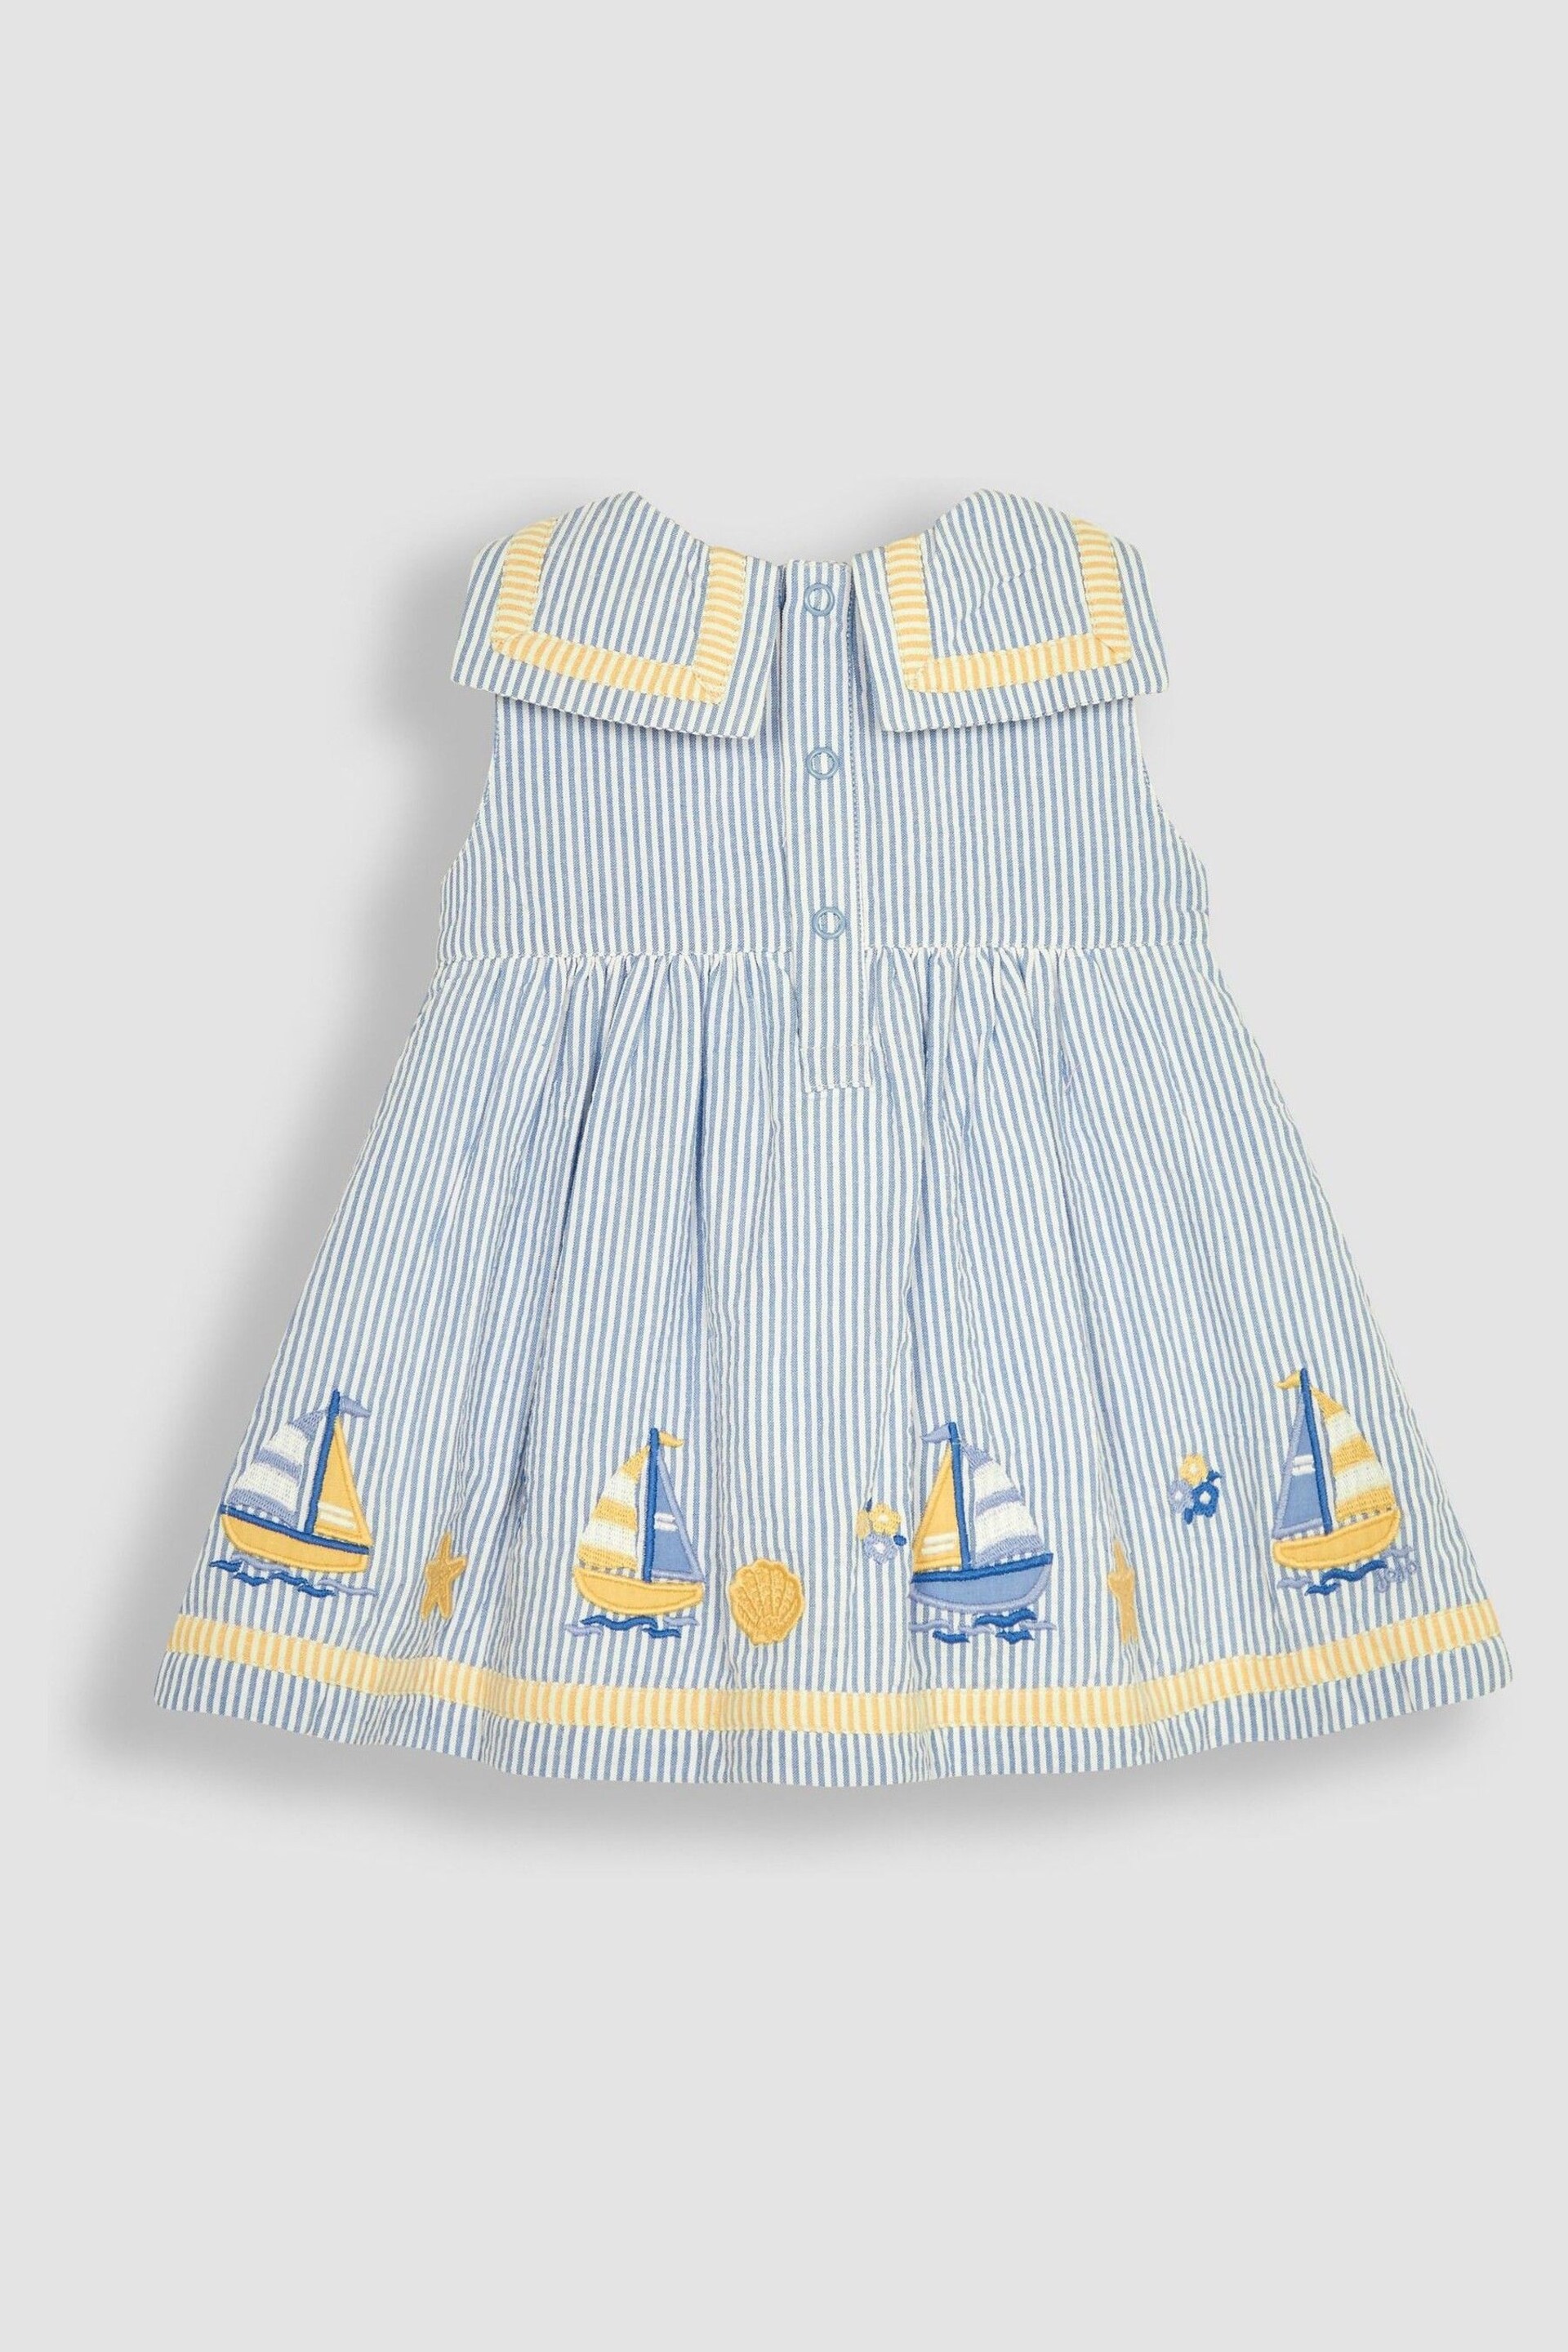 JoJo Maman Bébé Blue Boat Appliqué Sailor Baby Dress - Image 4 of 6